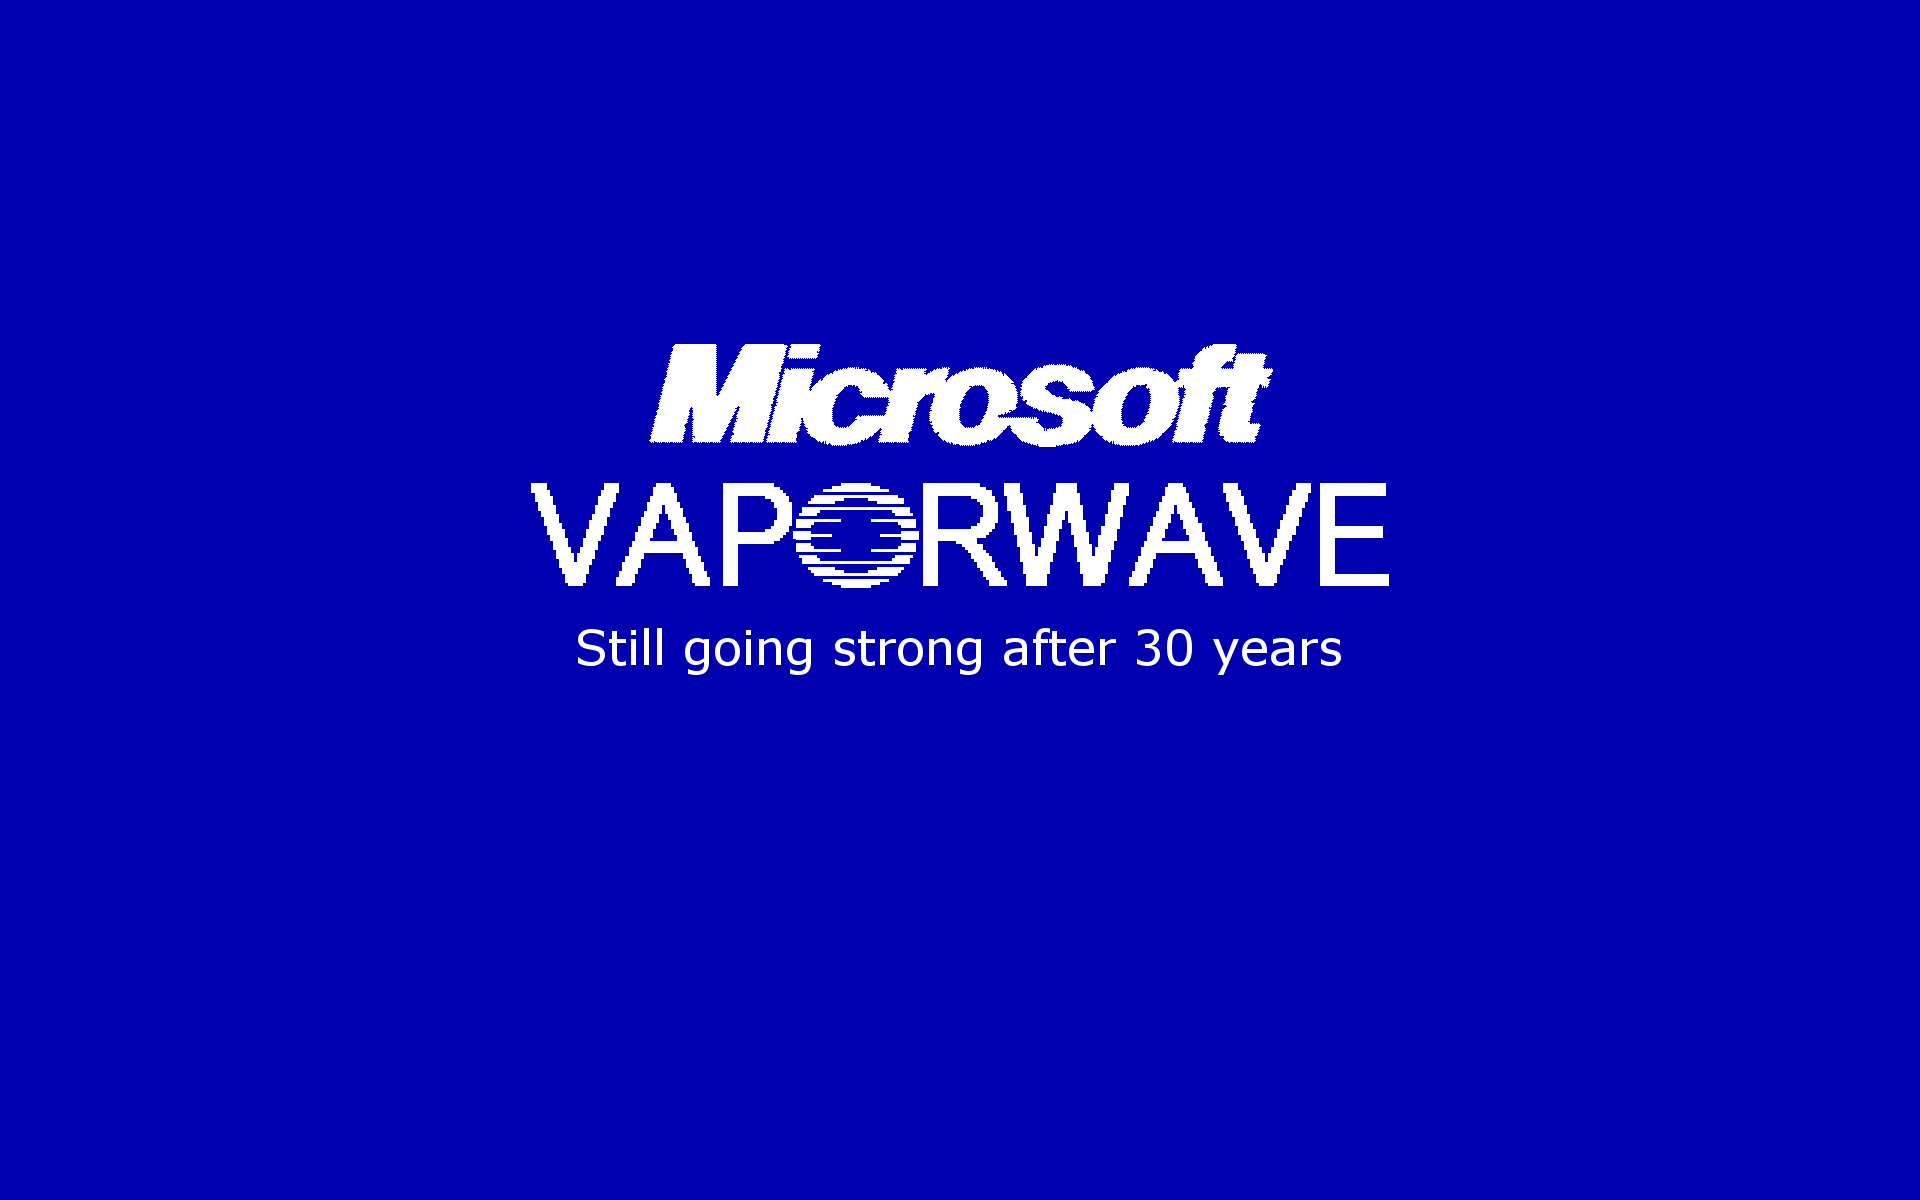 General 1920x1200 vaporwave 1990s Microsoft blue